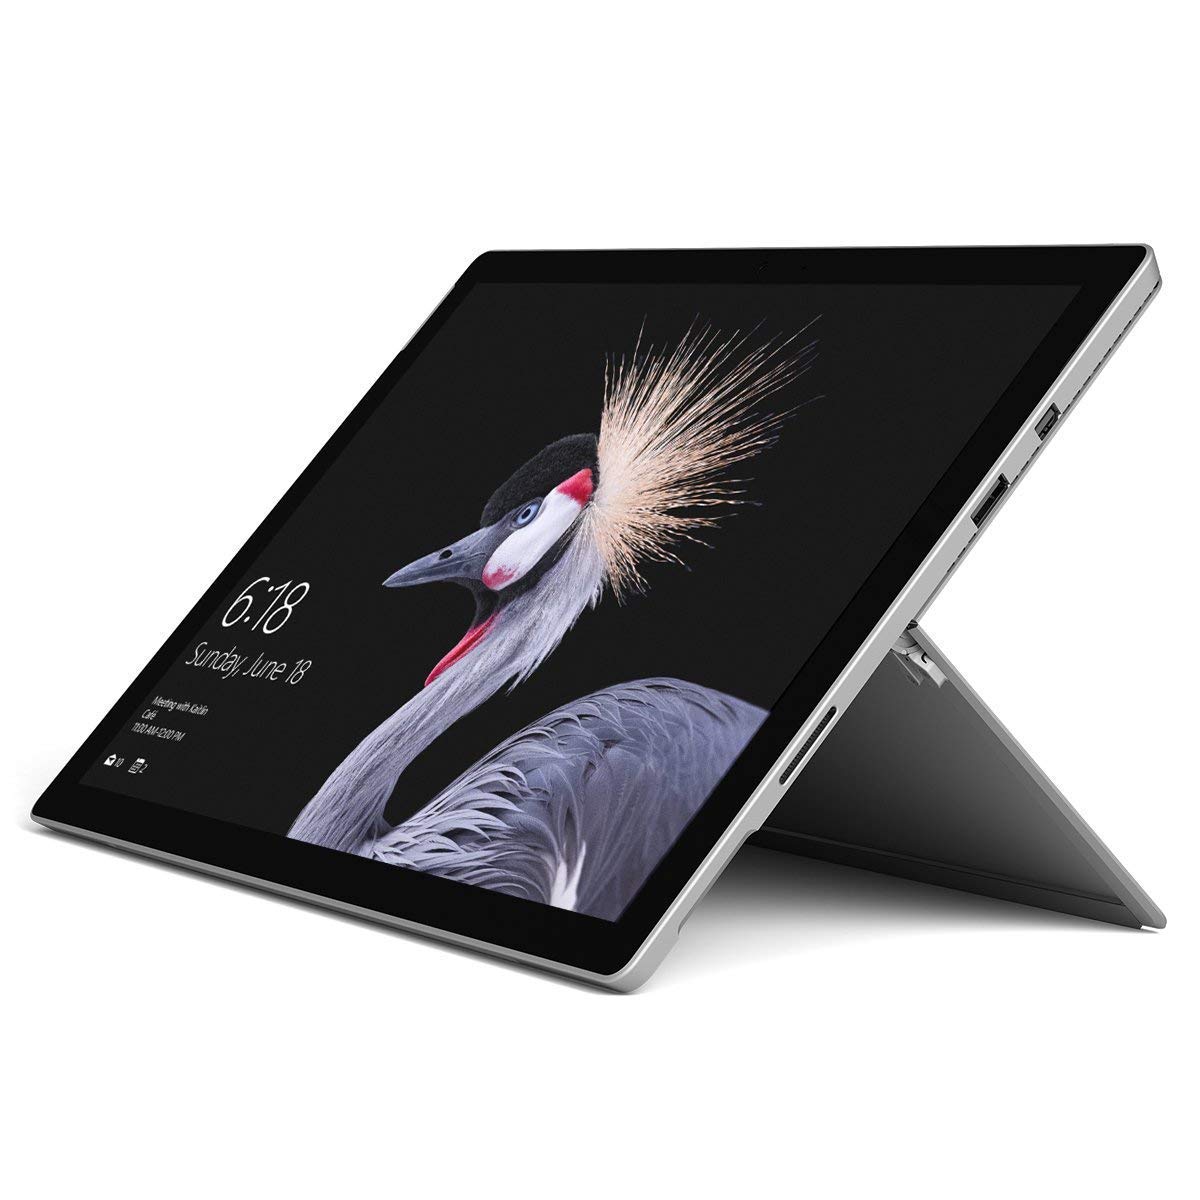 Microsoft KJR-00001 Surface Pro (Intel Core i5, 8GB RAM, 128GB) - Newest Version